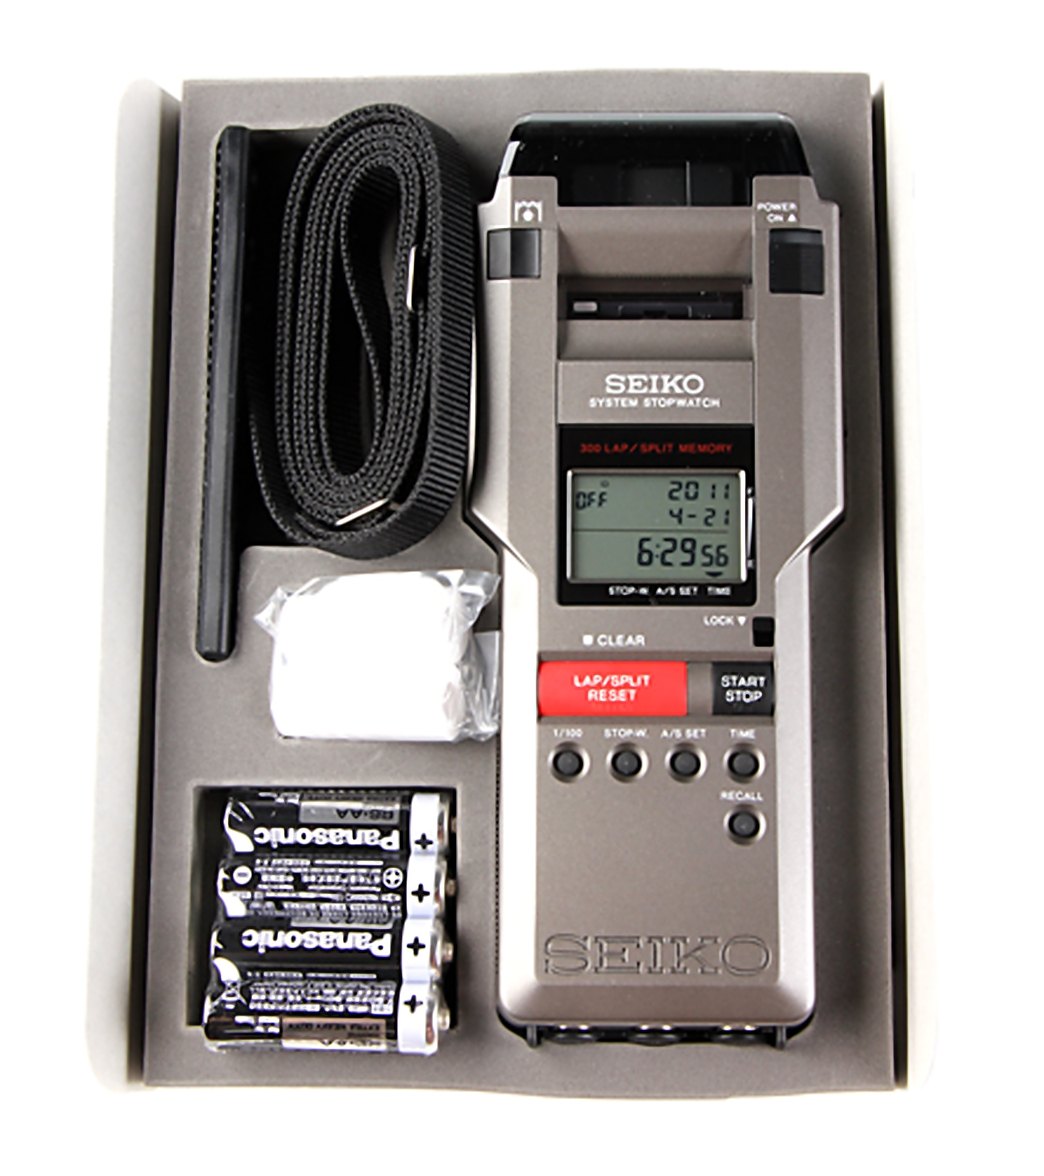 SEIKO S141-300 Lap Memory Stopwatch at 